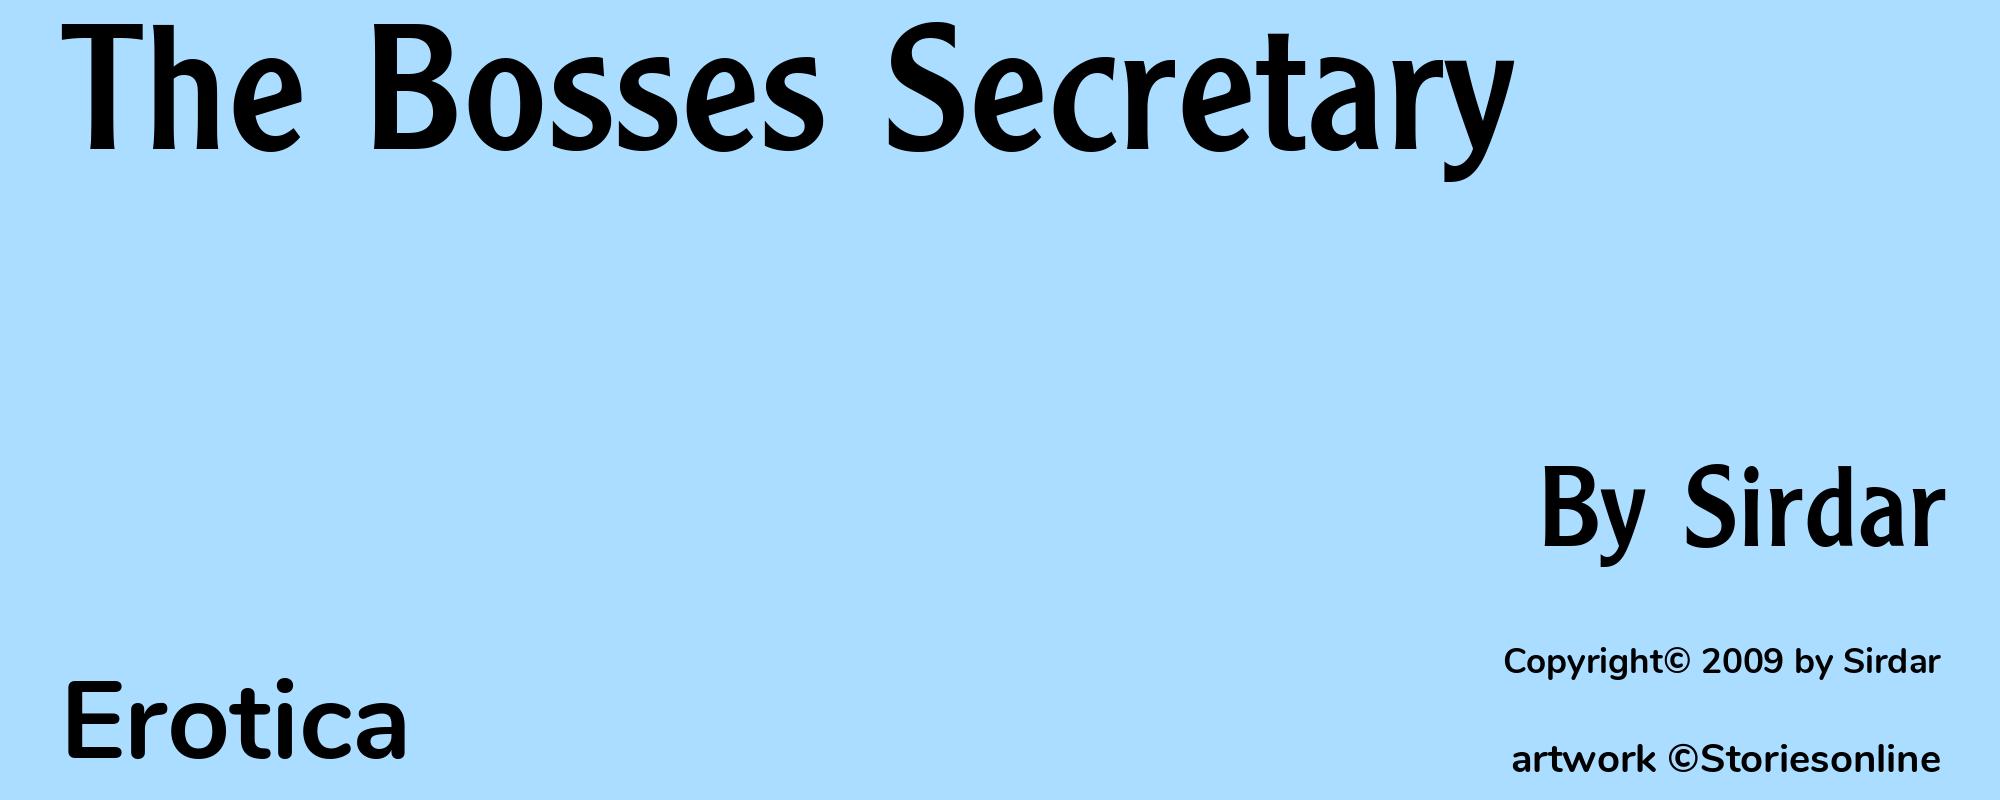 The Bosses Secretary - Cover